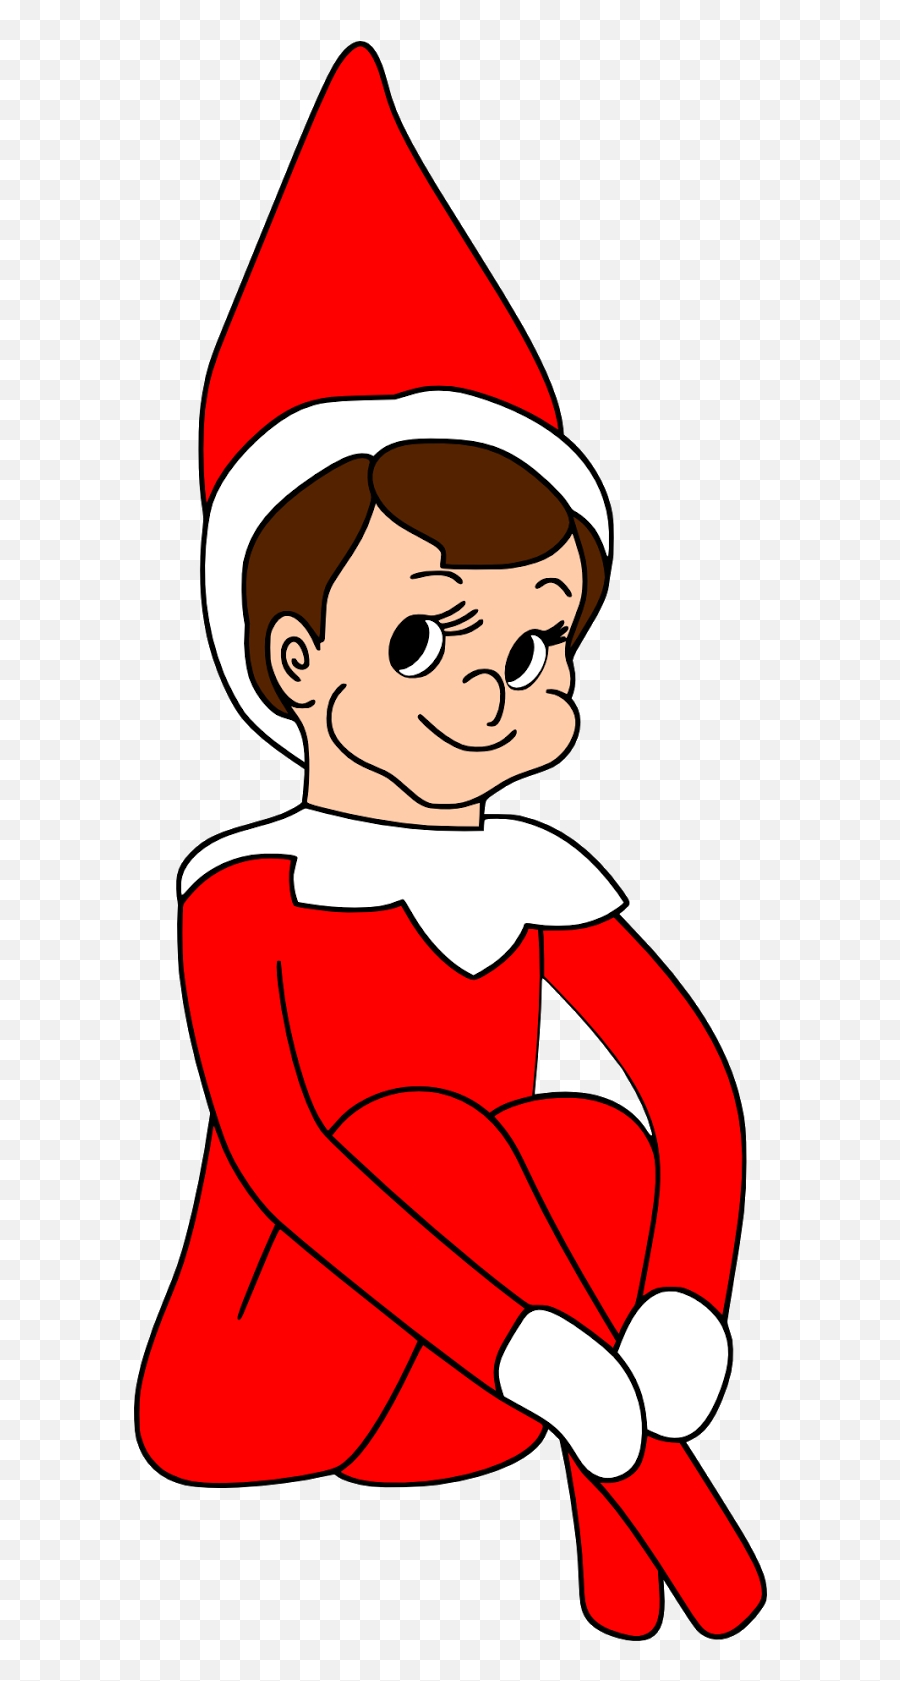 2014 - Clipart Elf On The Shelf Cartoon Emoji,Elf On The Shelf Emoji